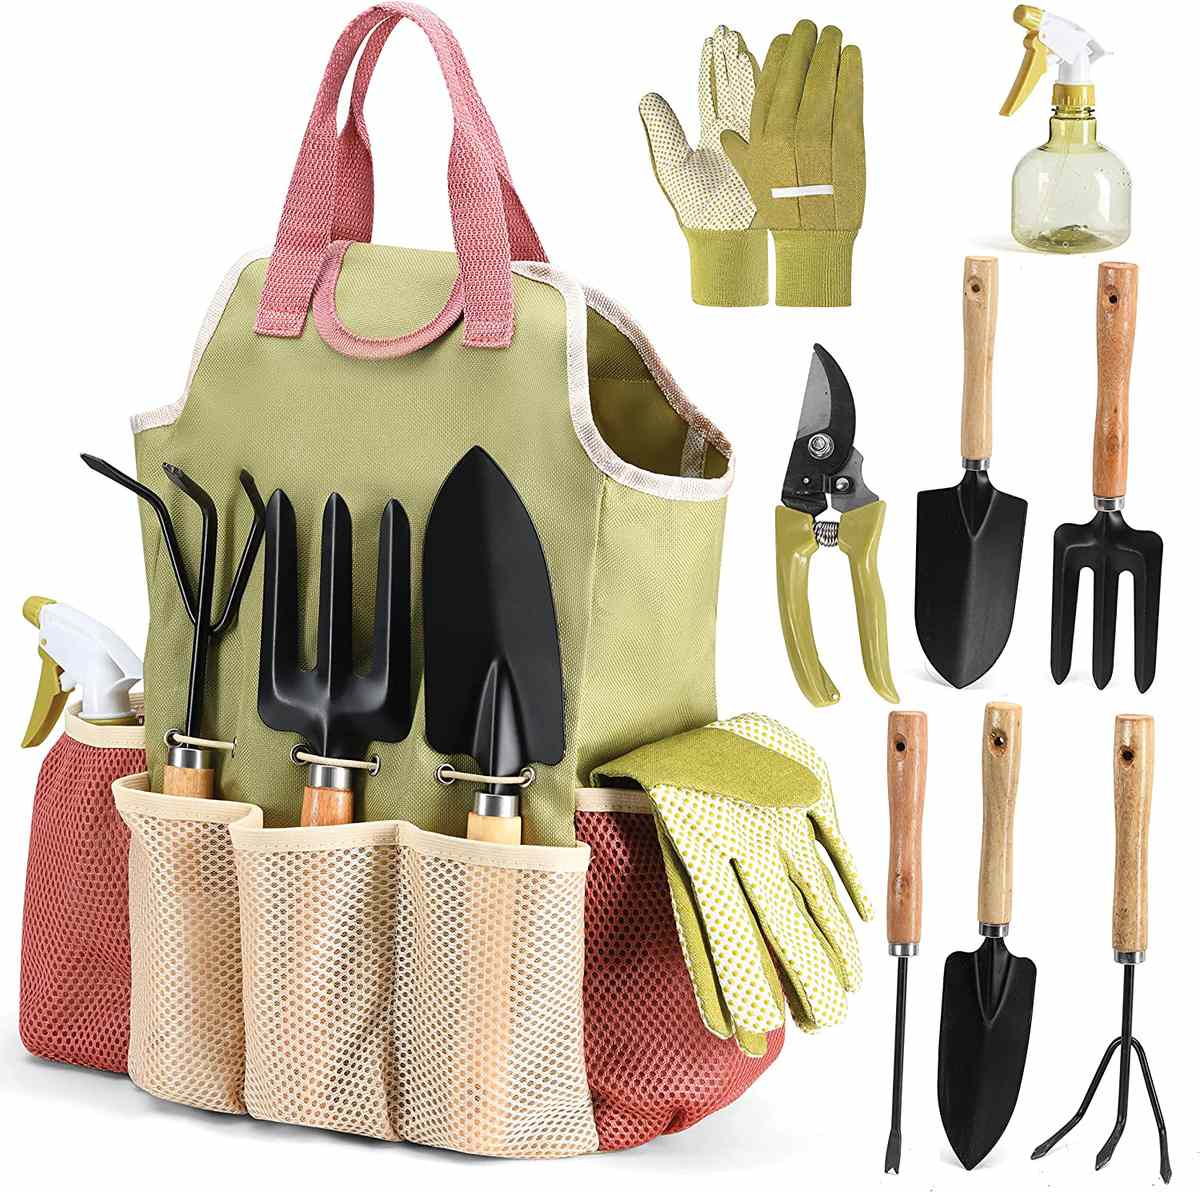 garden tool kit